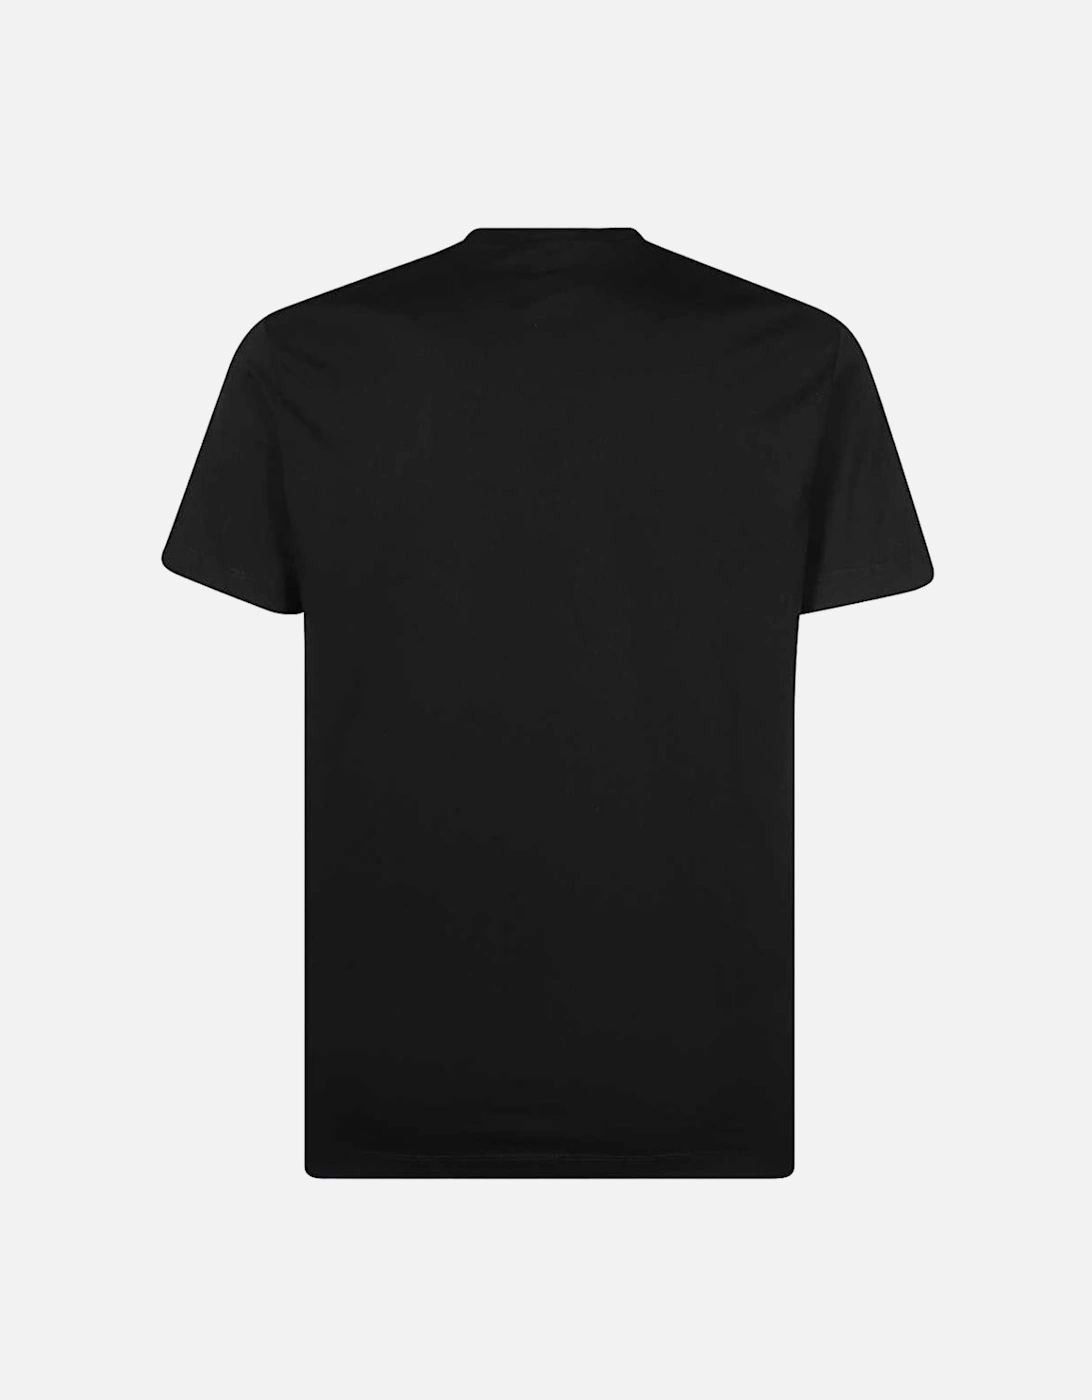 Multi Brand Fading Logo Black T-Shirt